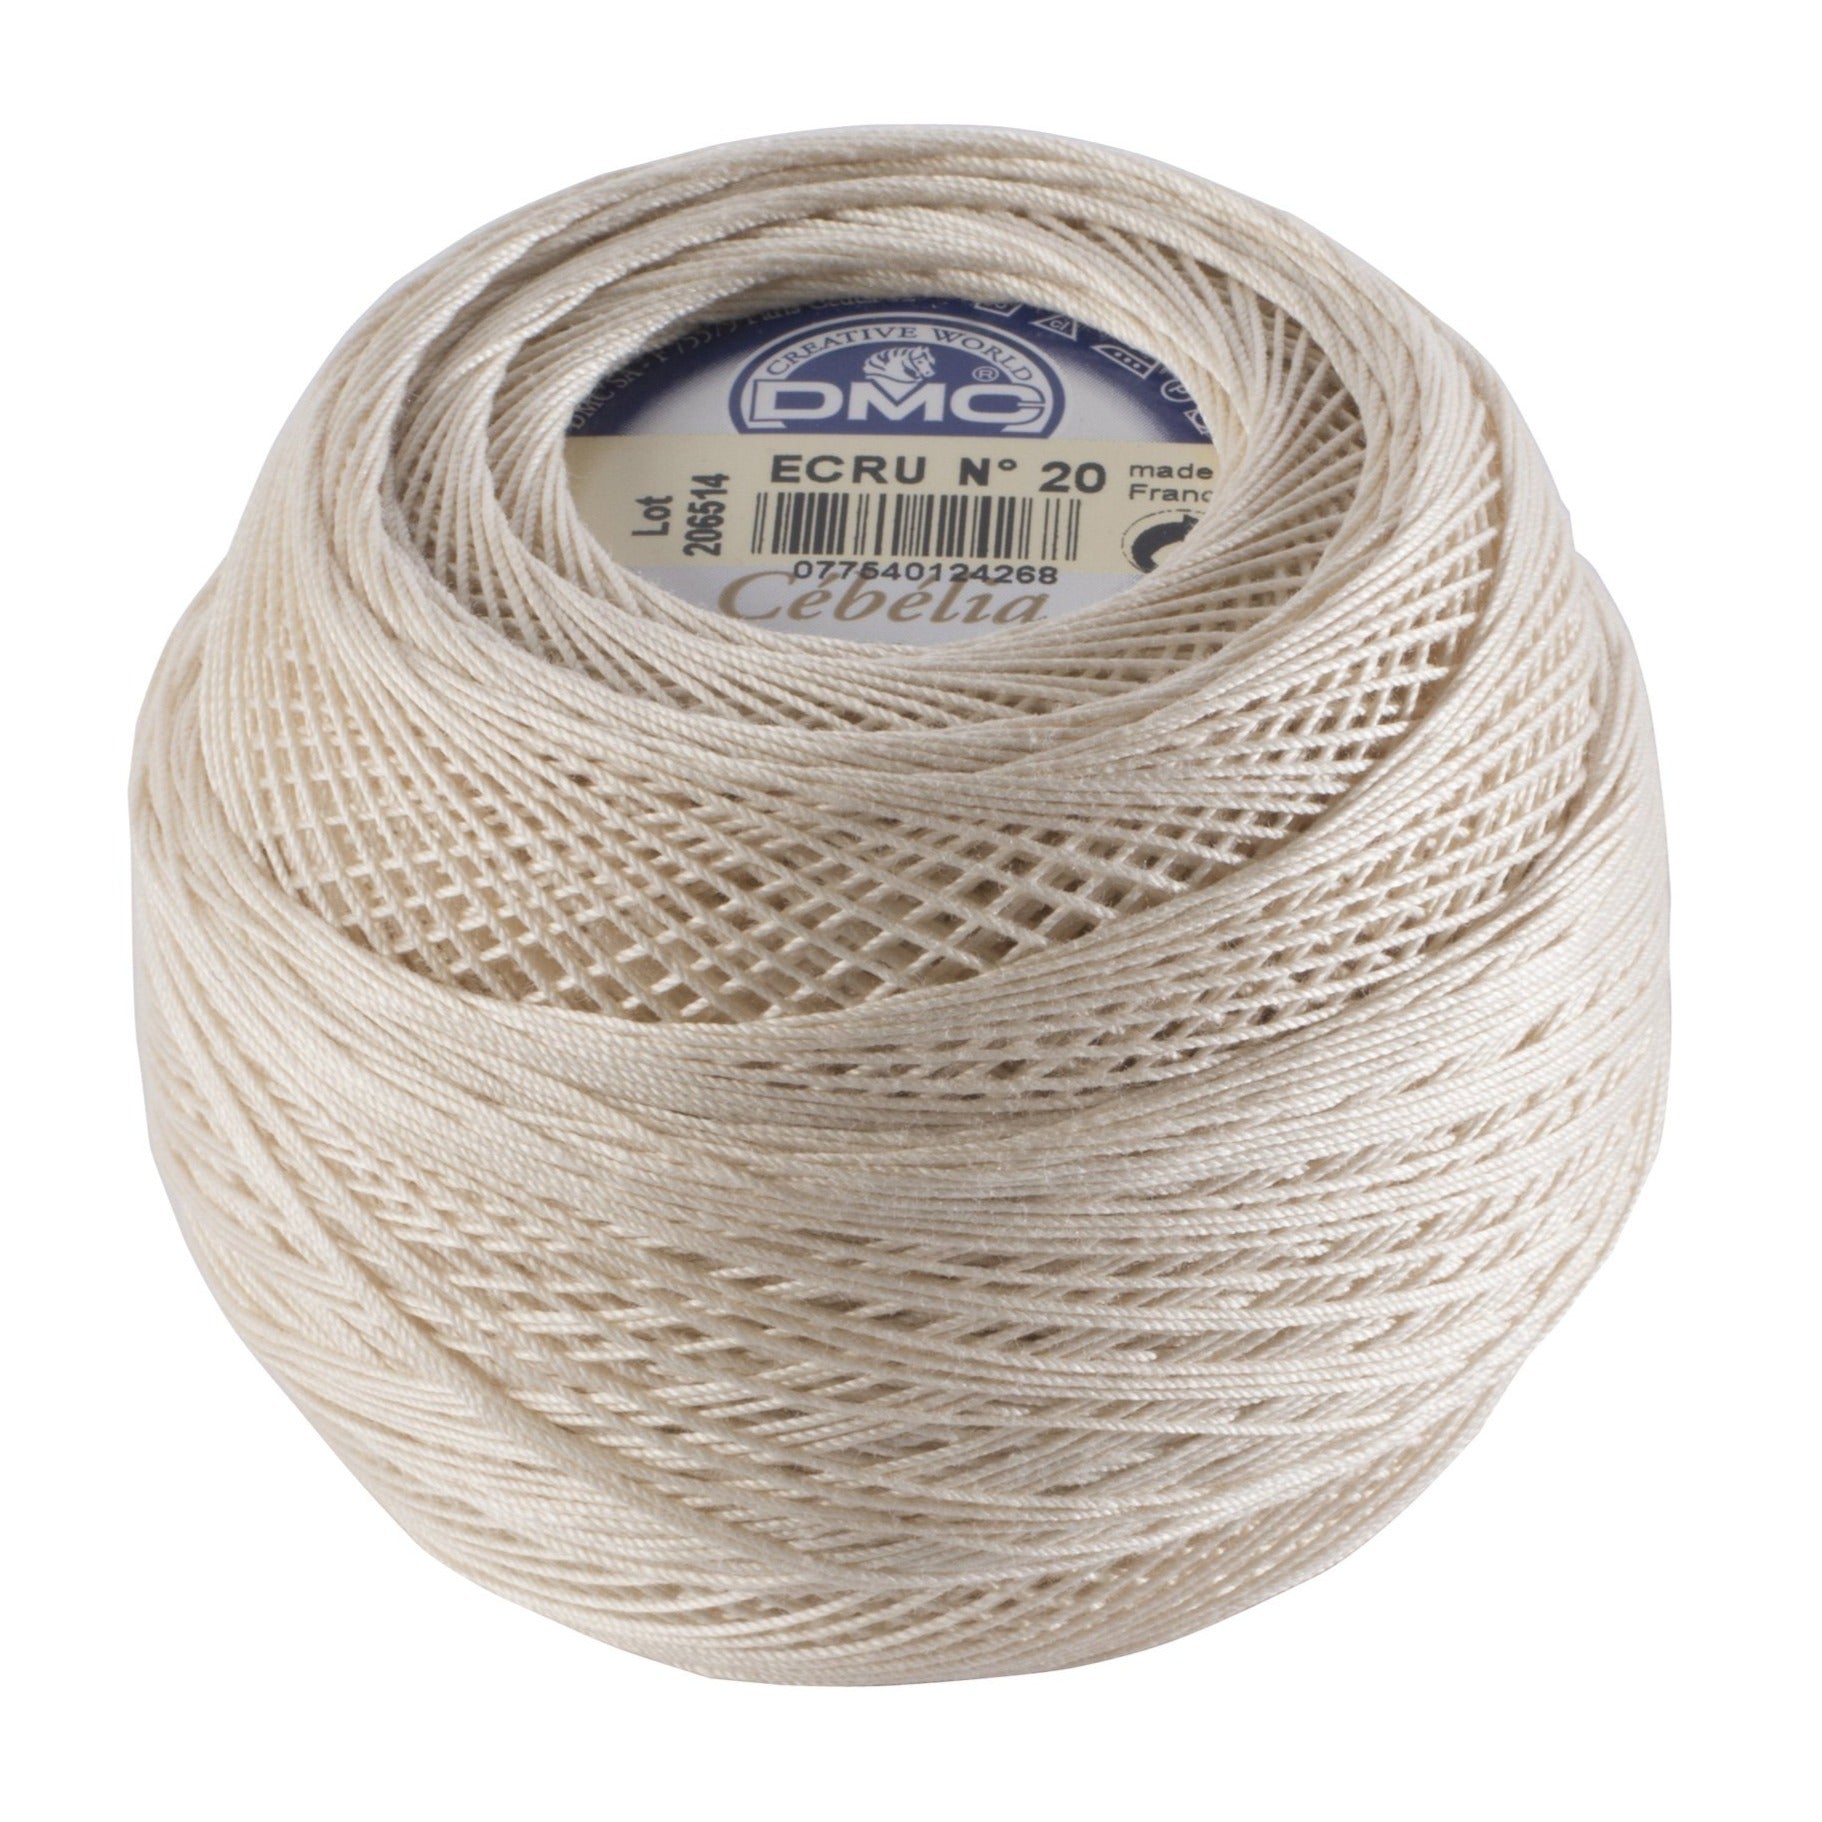 Cebelia Crochet Cotton 10